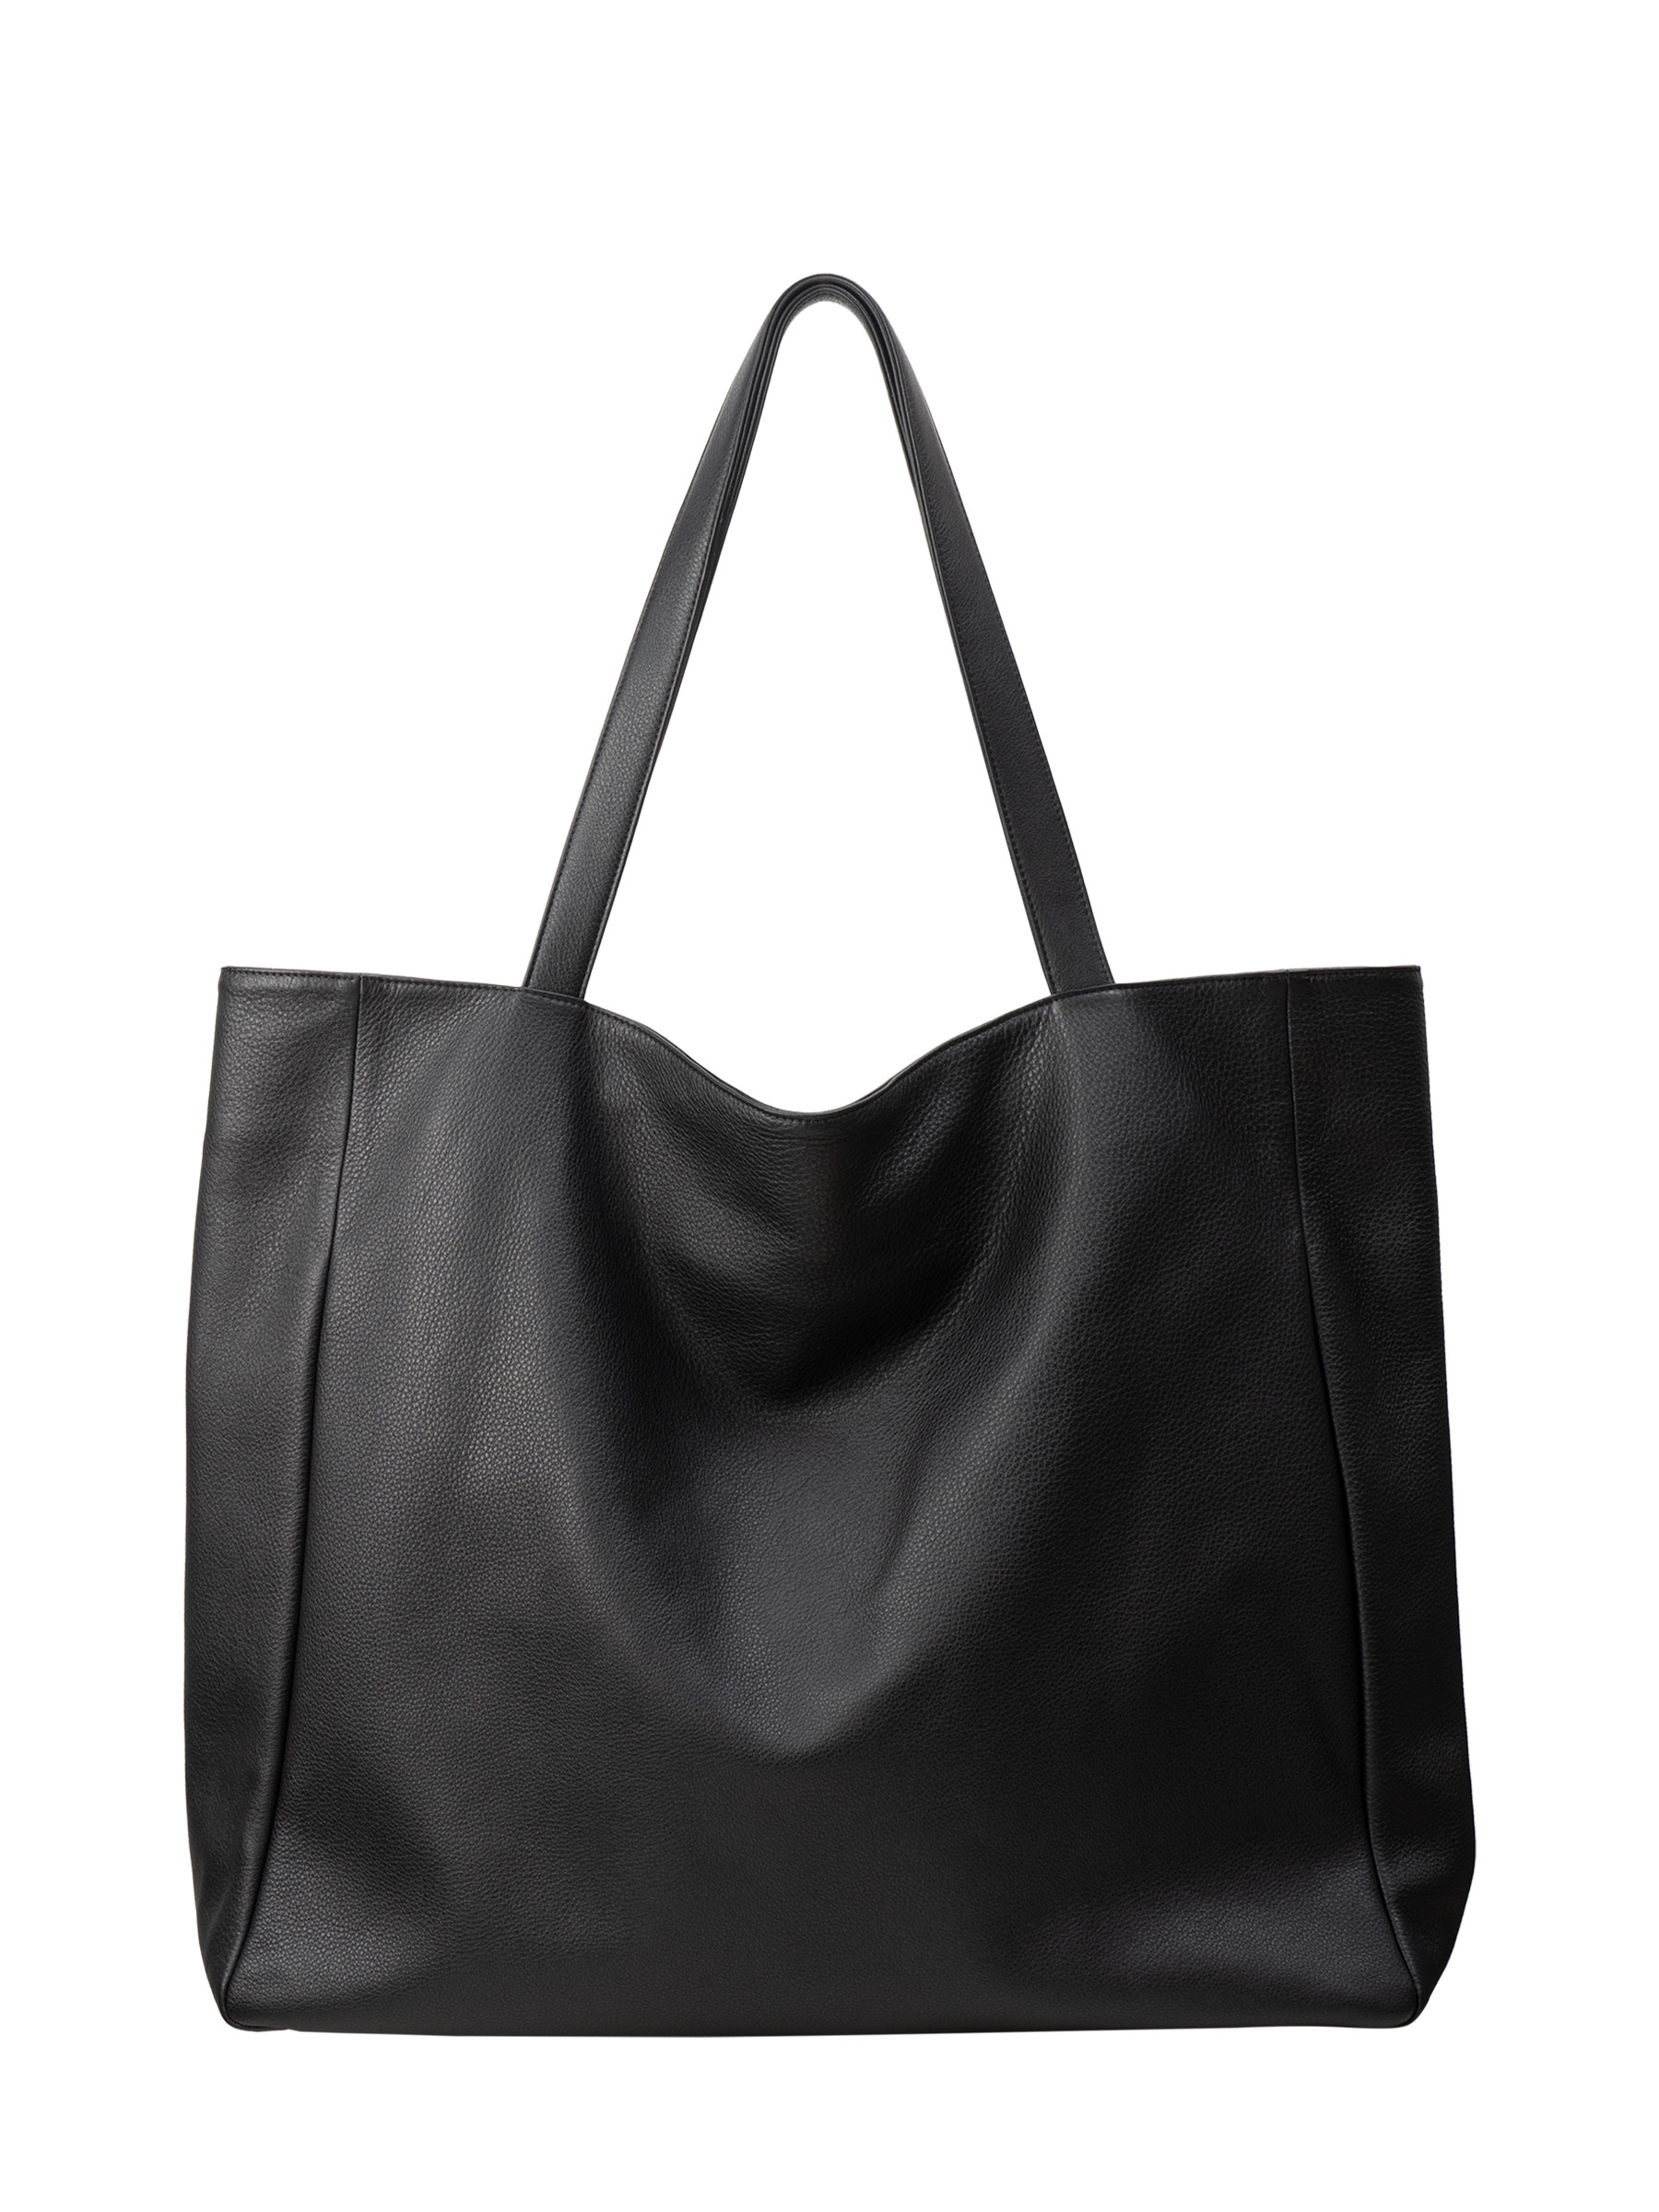 FABER ONE shoulder bag in black calfskin leather | TSATSAS